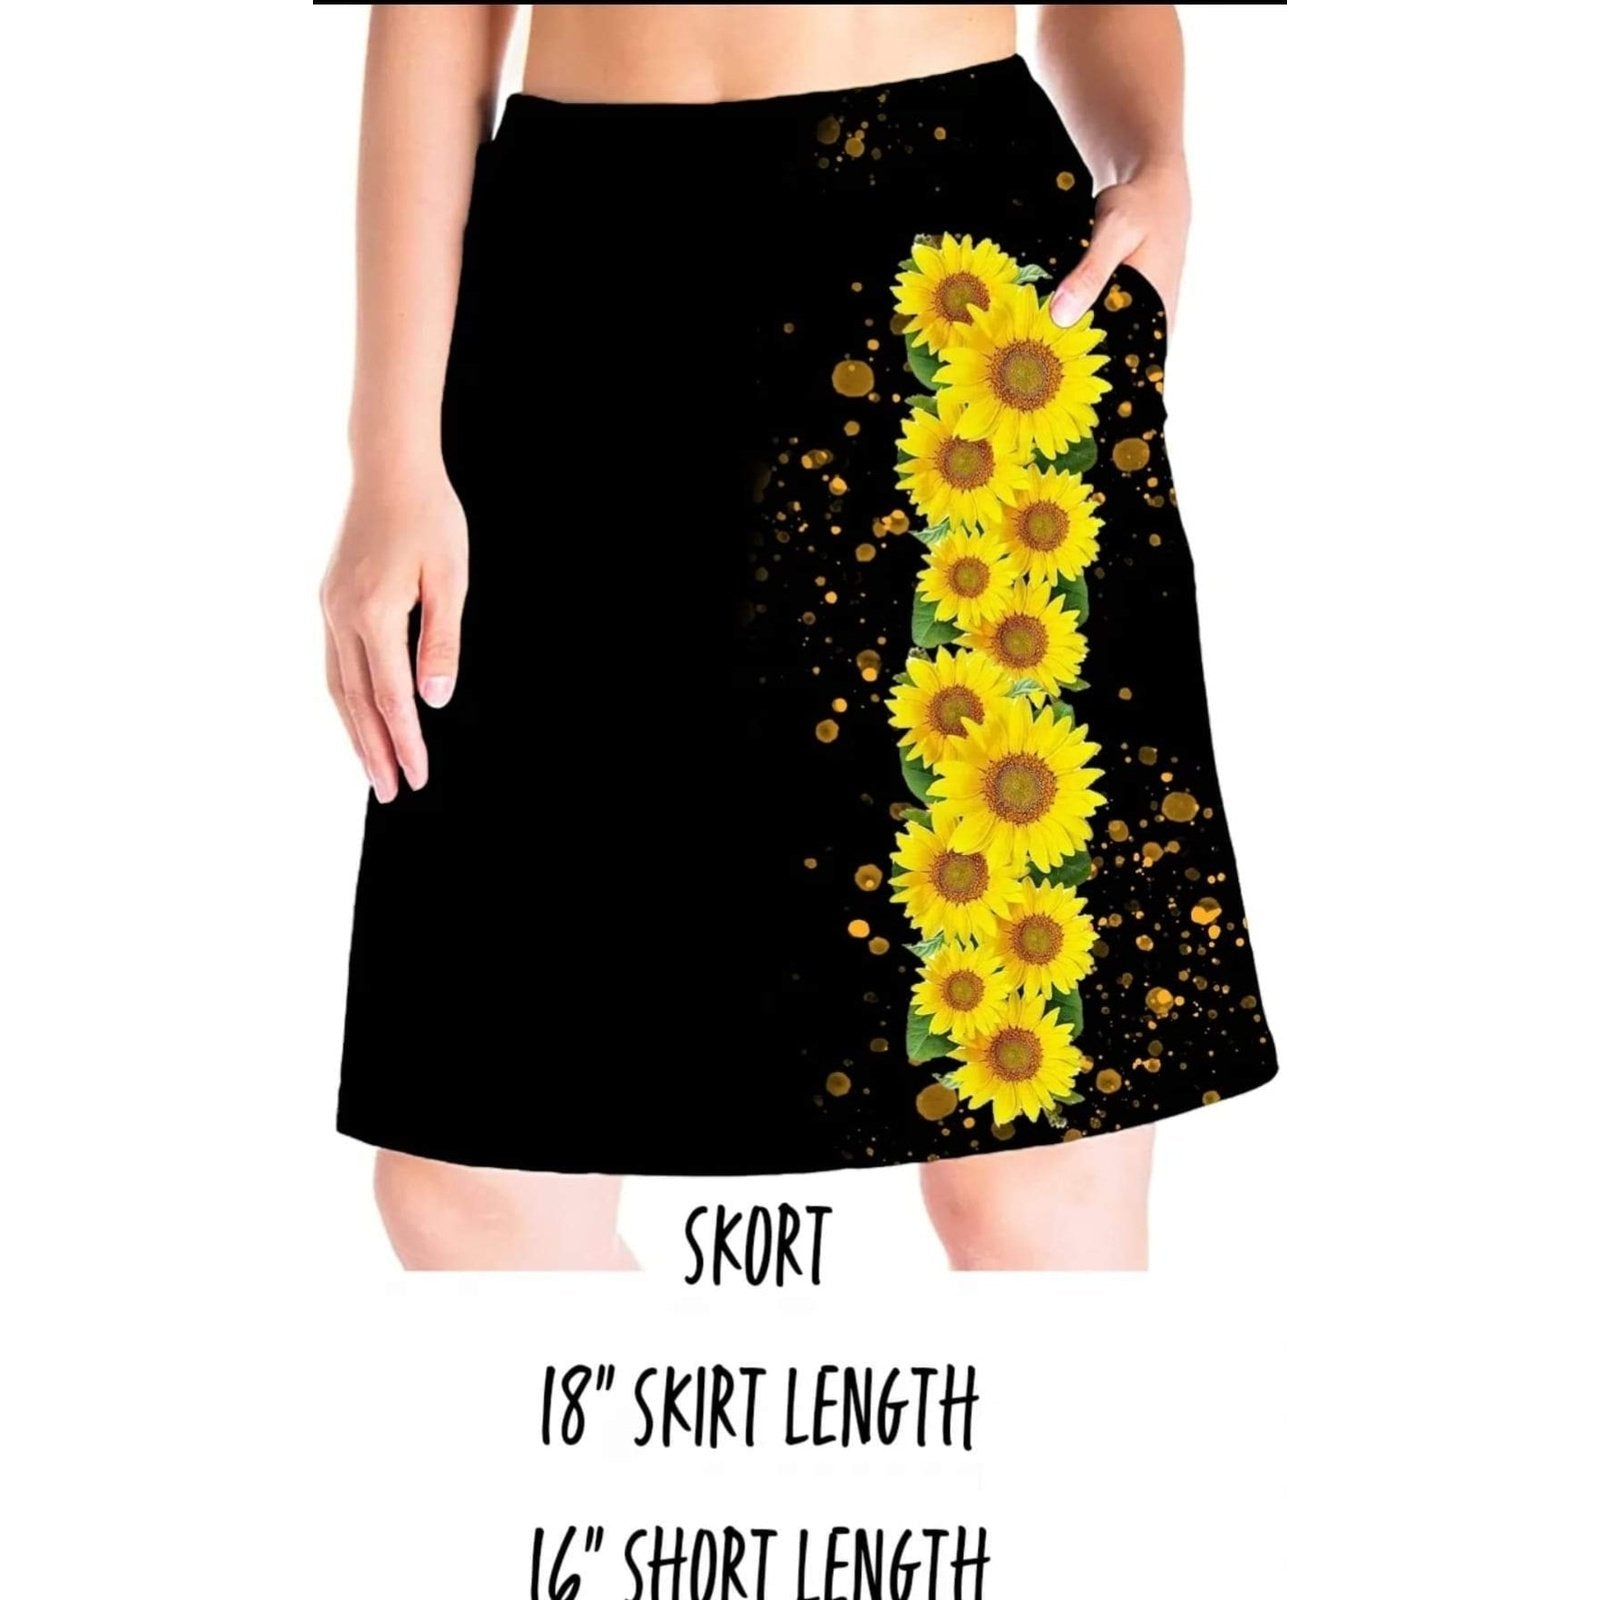 Sunflower Spree Skort Skirt Shorts with Pockets.